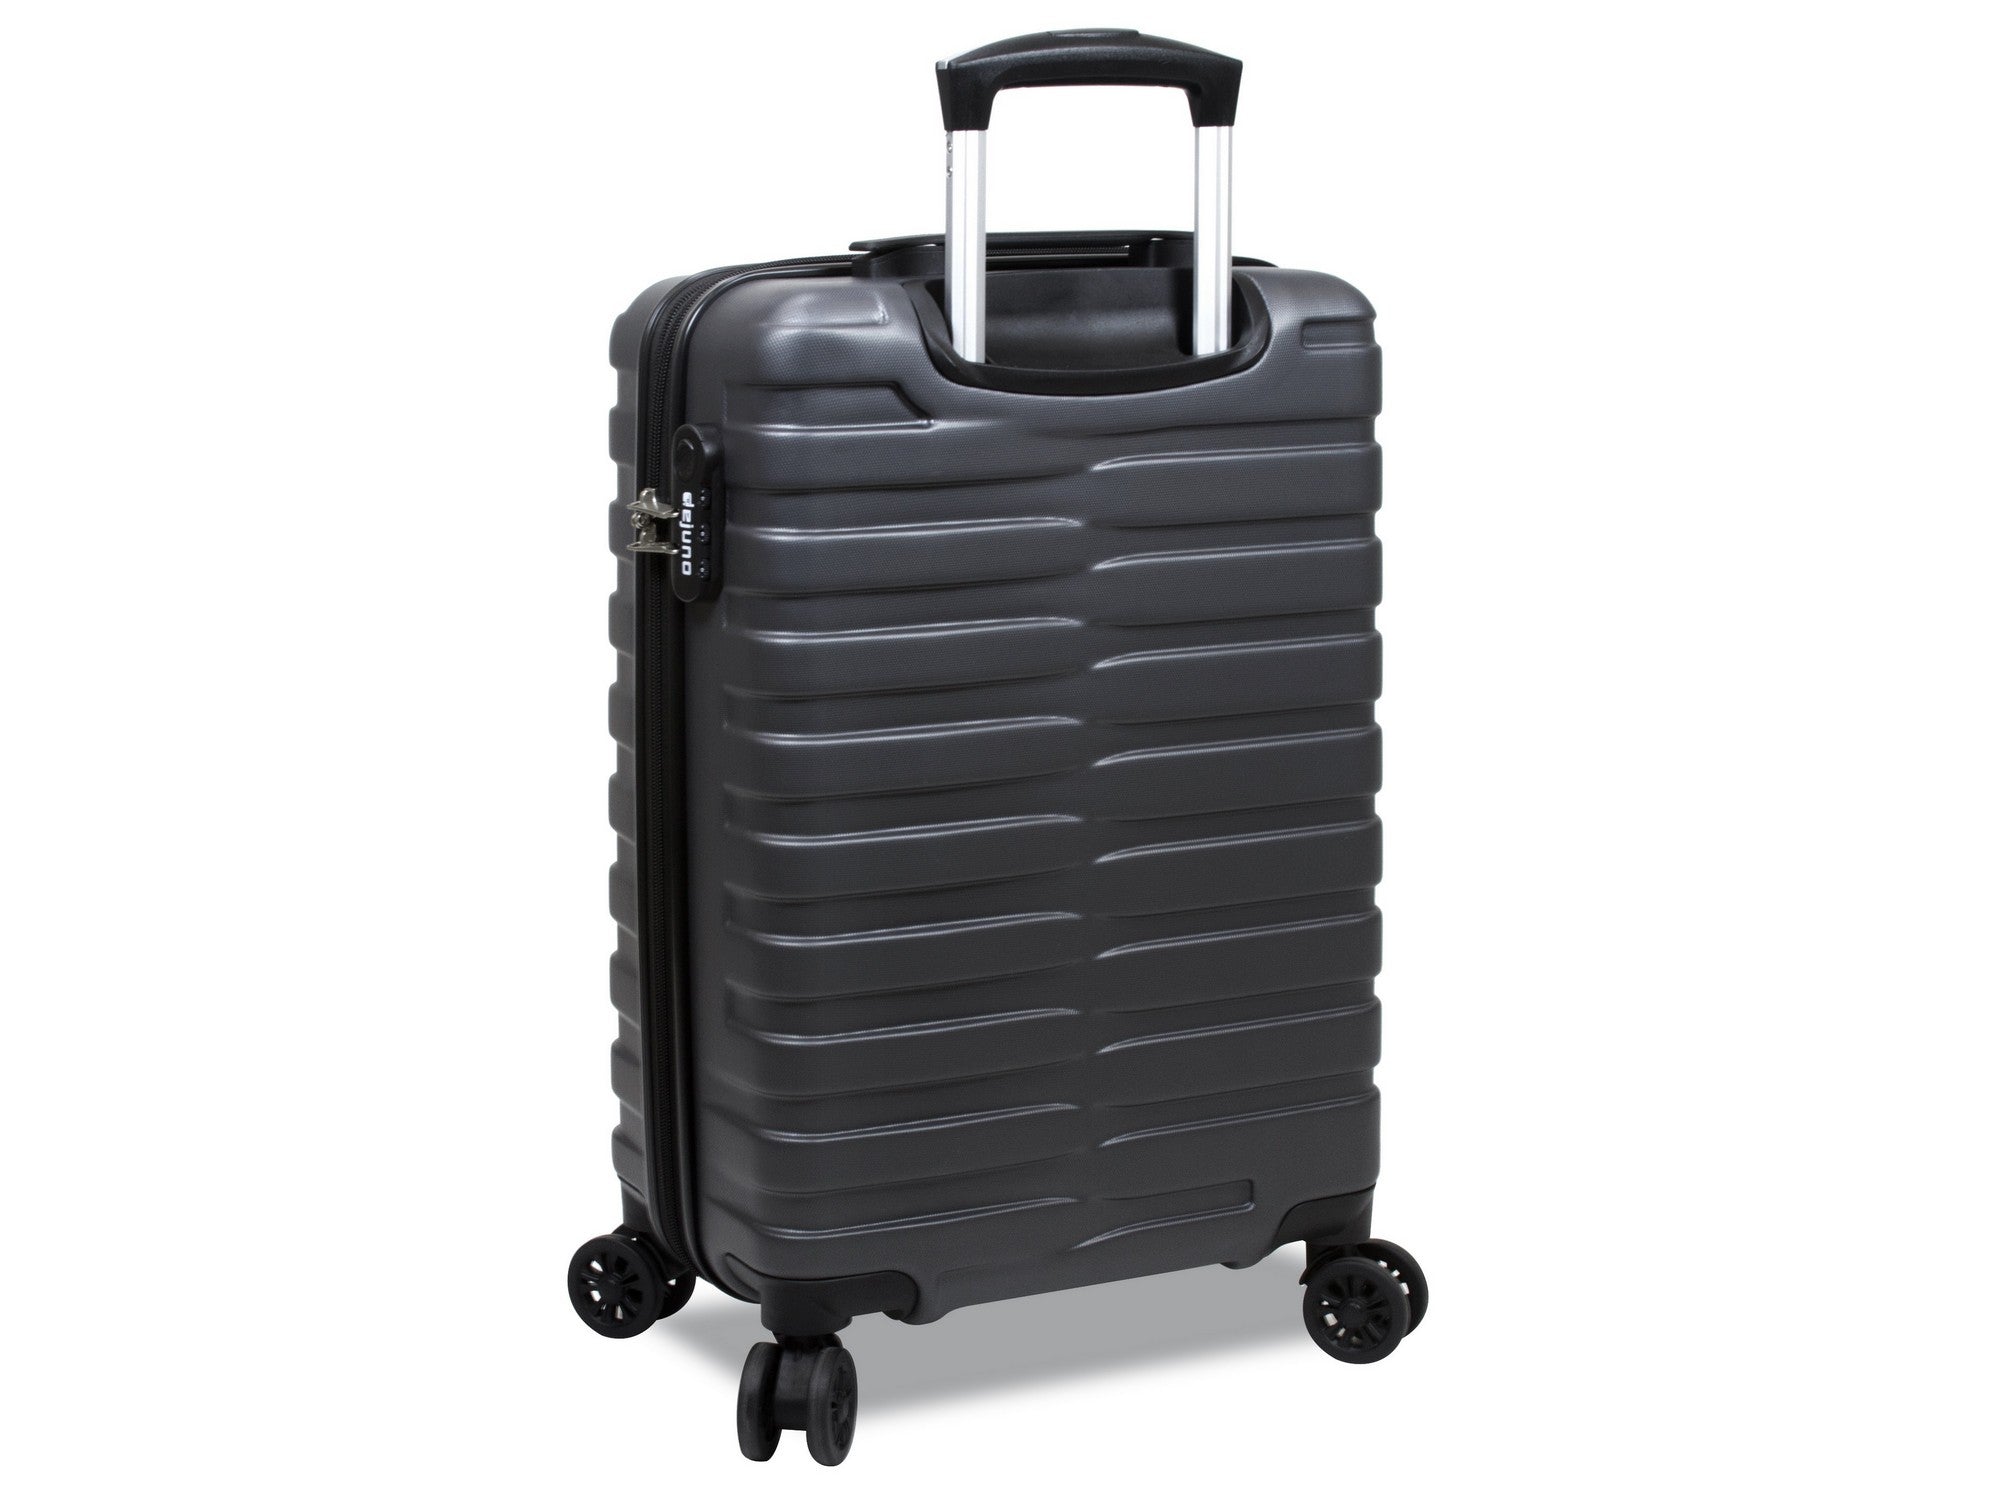 Dejuno Cortex Lightweight 3-Piece Hardside Spinner Luggage Set